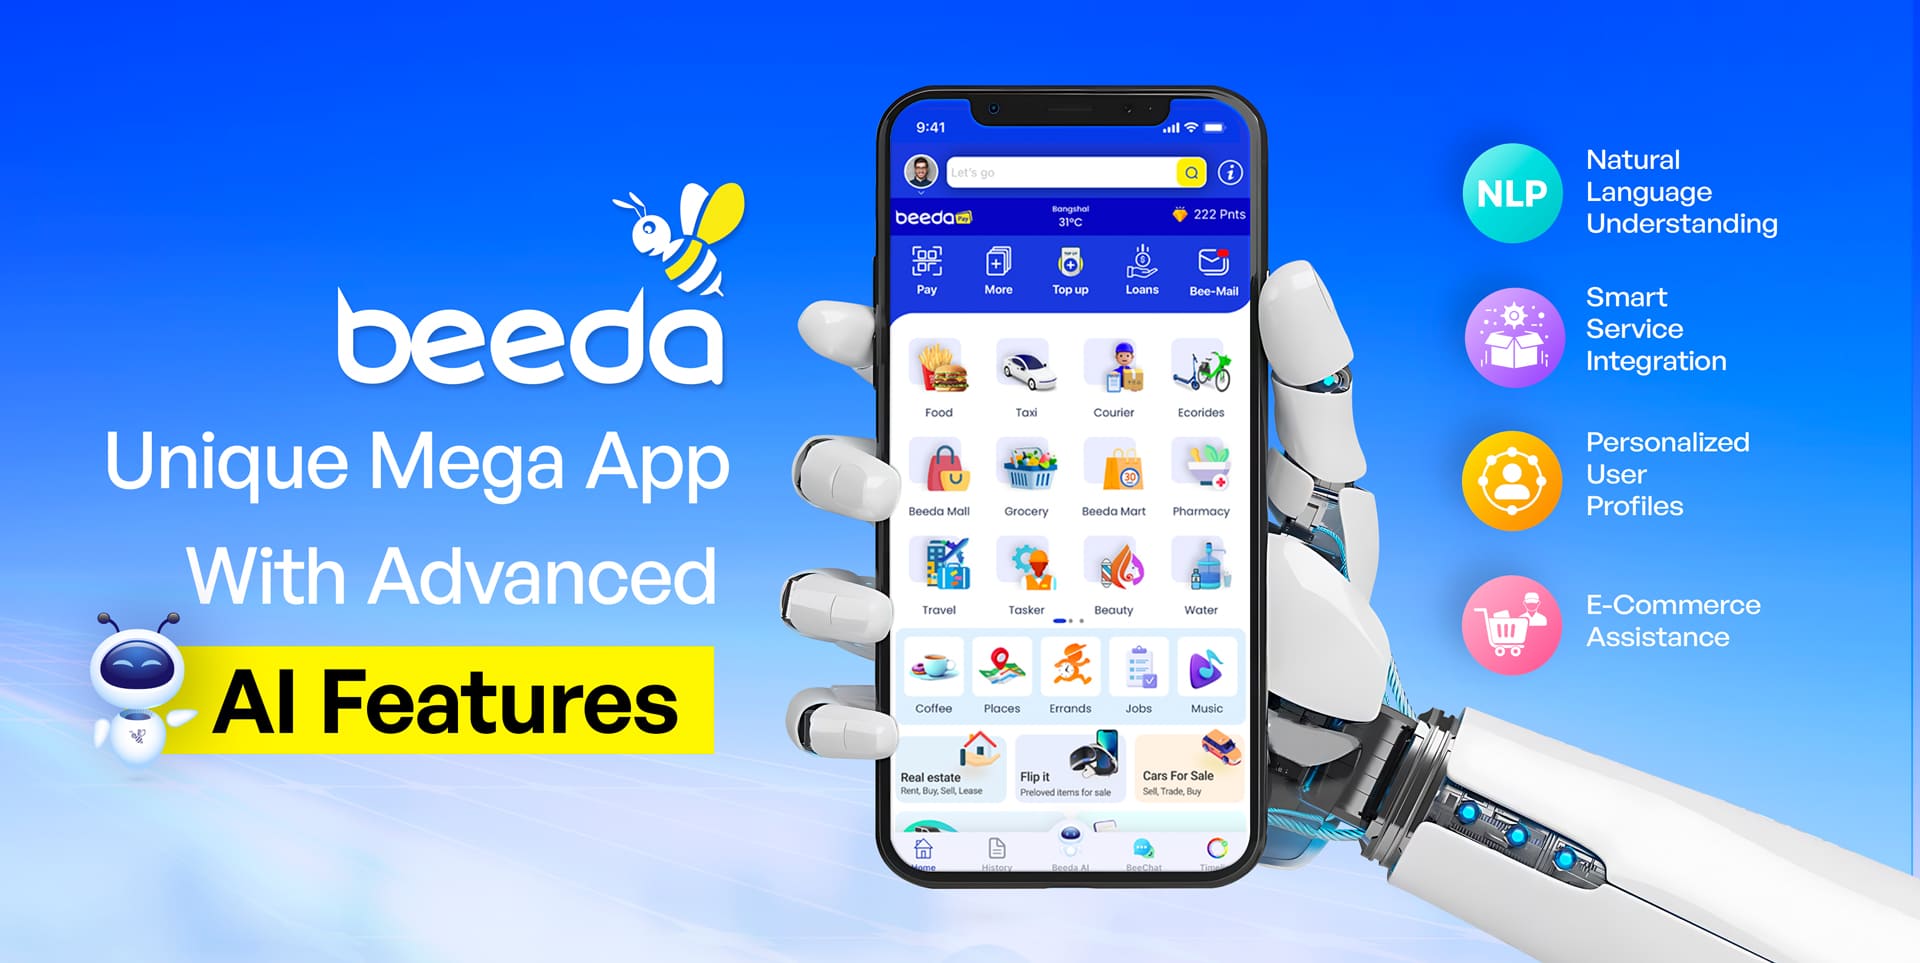 Unique Mega App with Advanced AI Features: Beeda